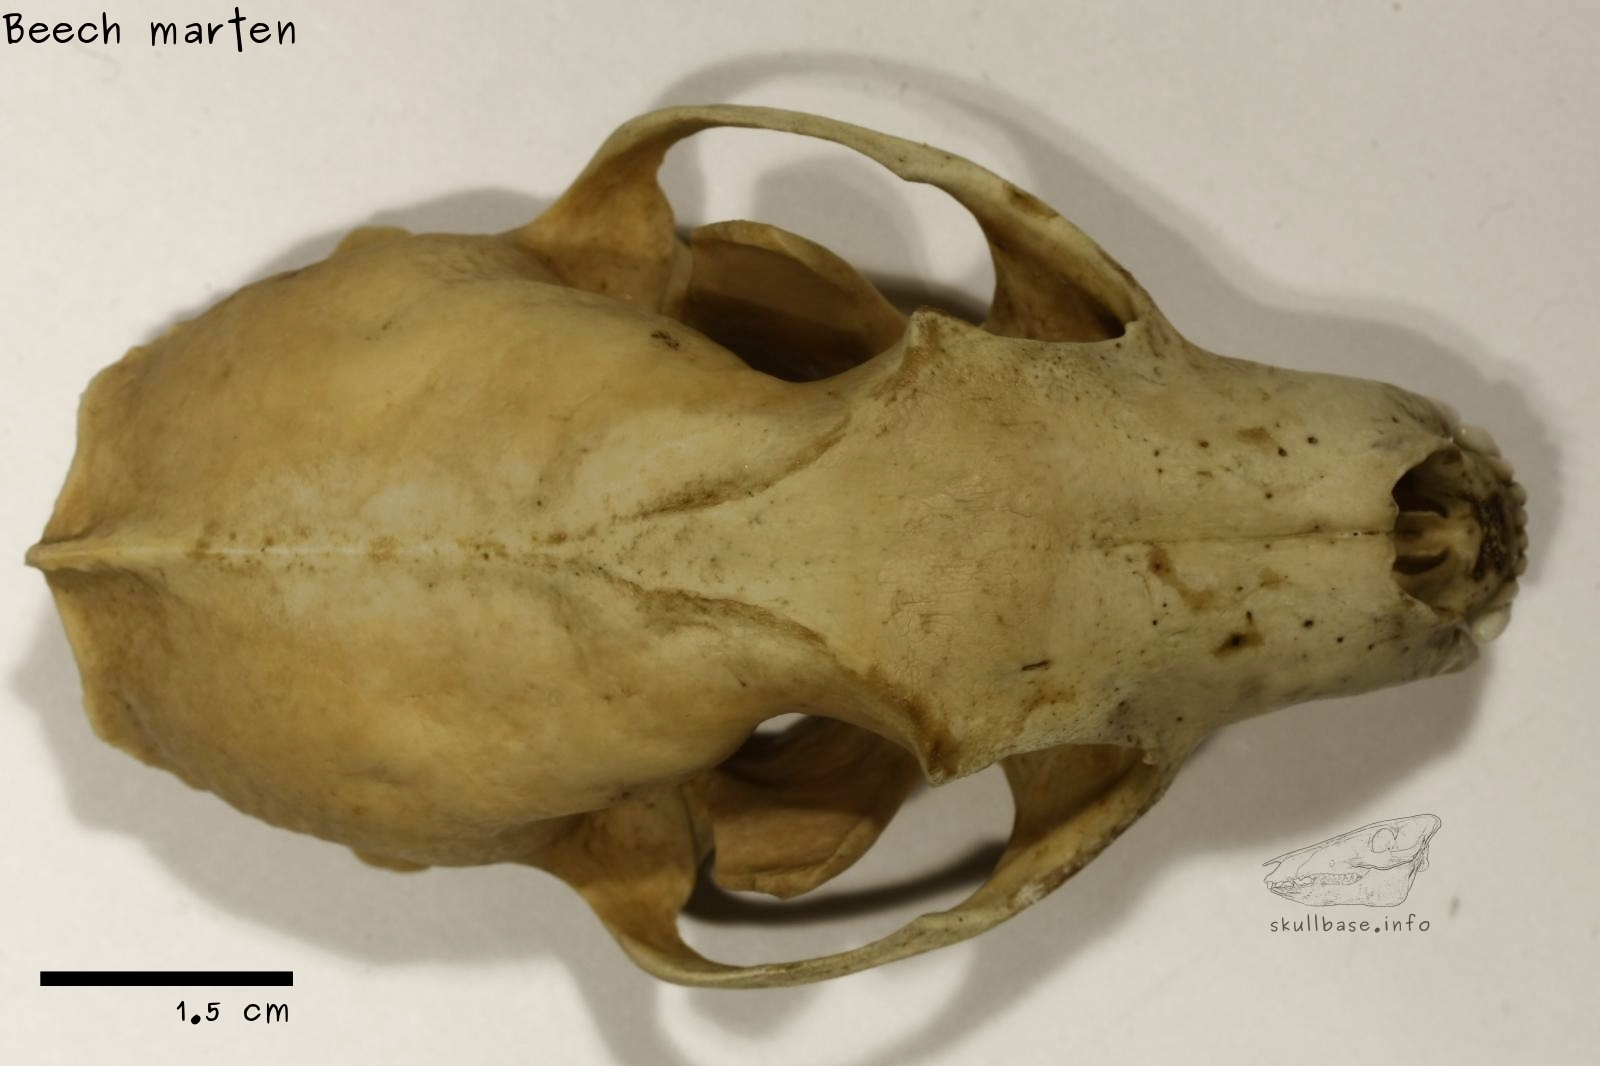 Beech marten (Martes foina) skull dorsal view